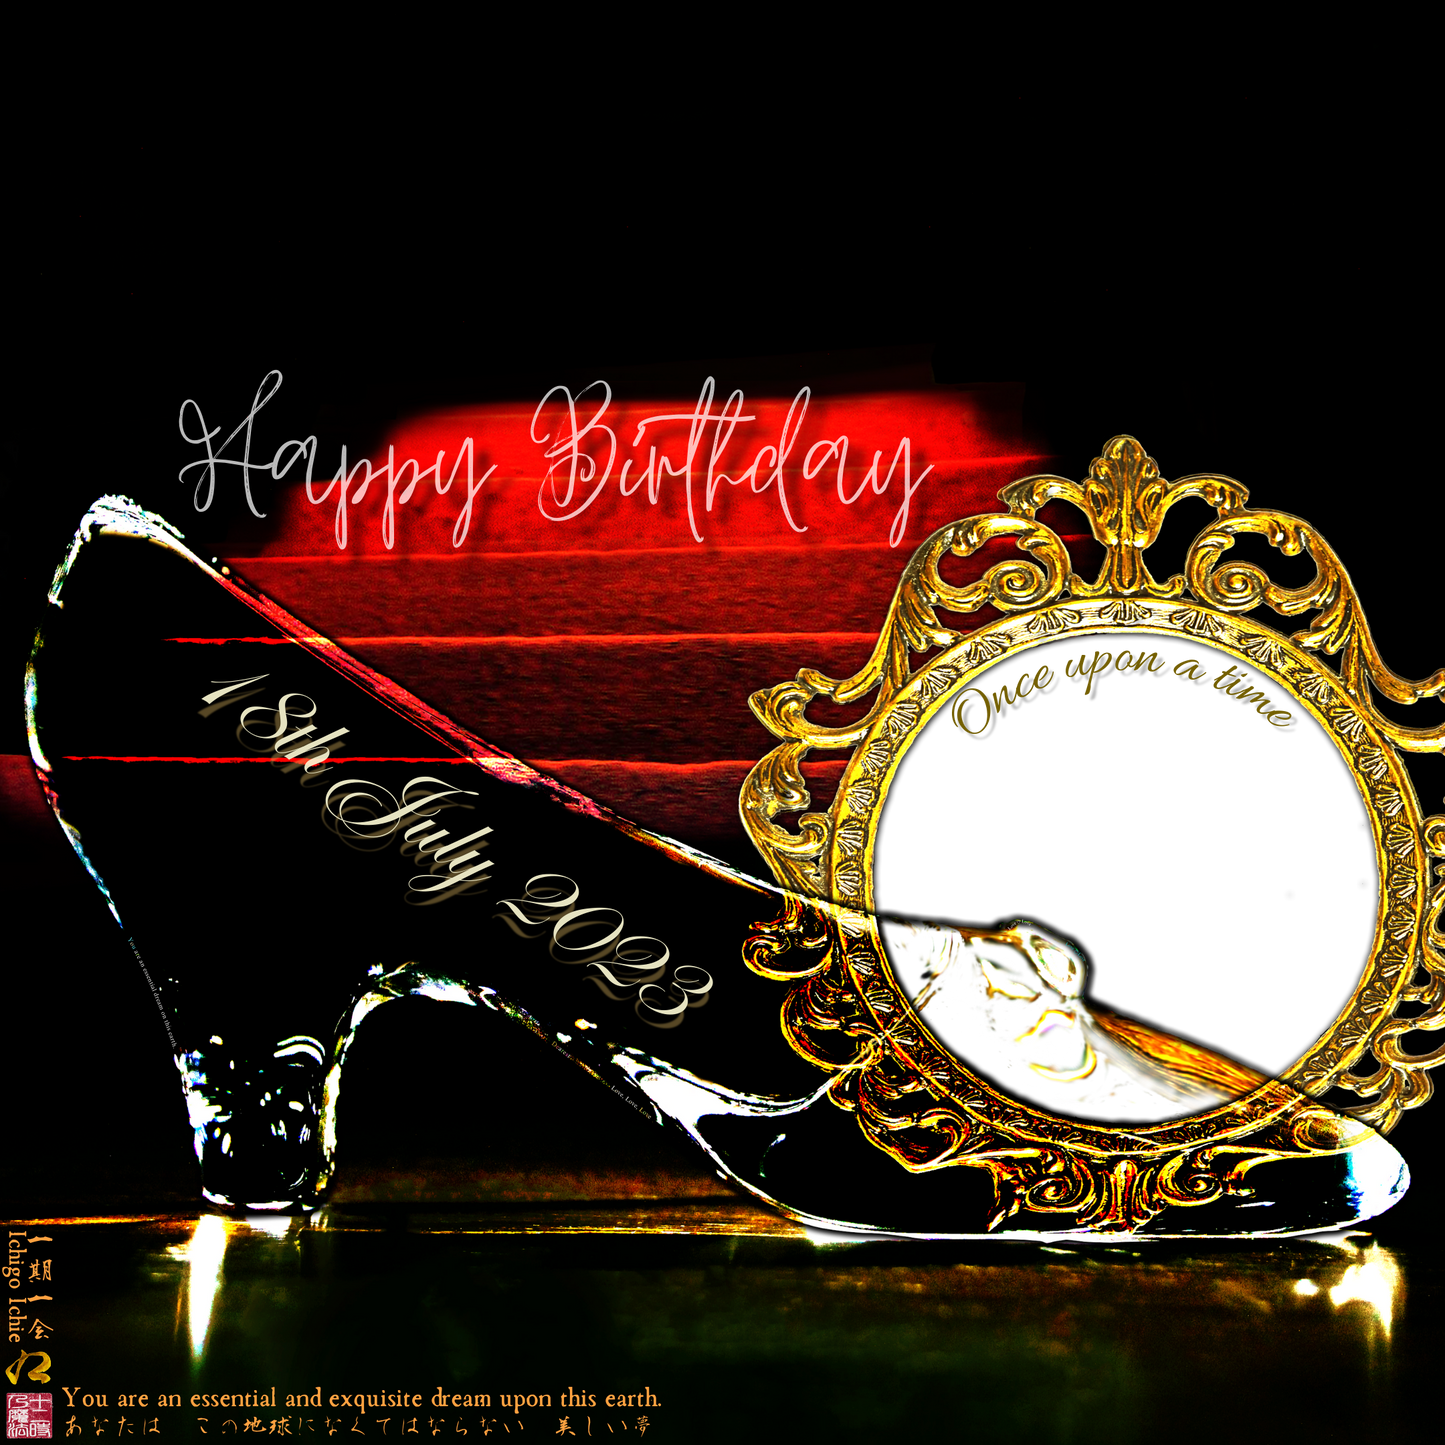 Happy Birthday Glass Slipper "Ichigo Ichie" 18th July 2023 the Right (1-of-1) NFT Art